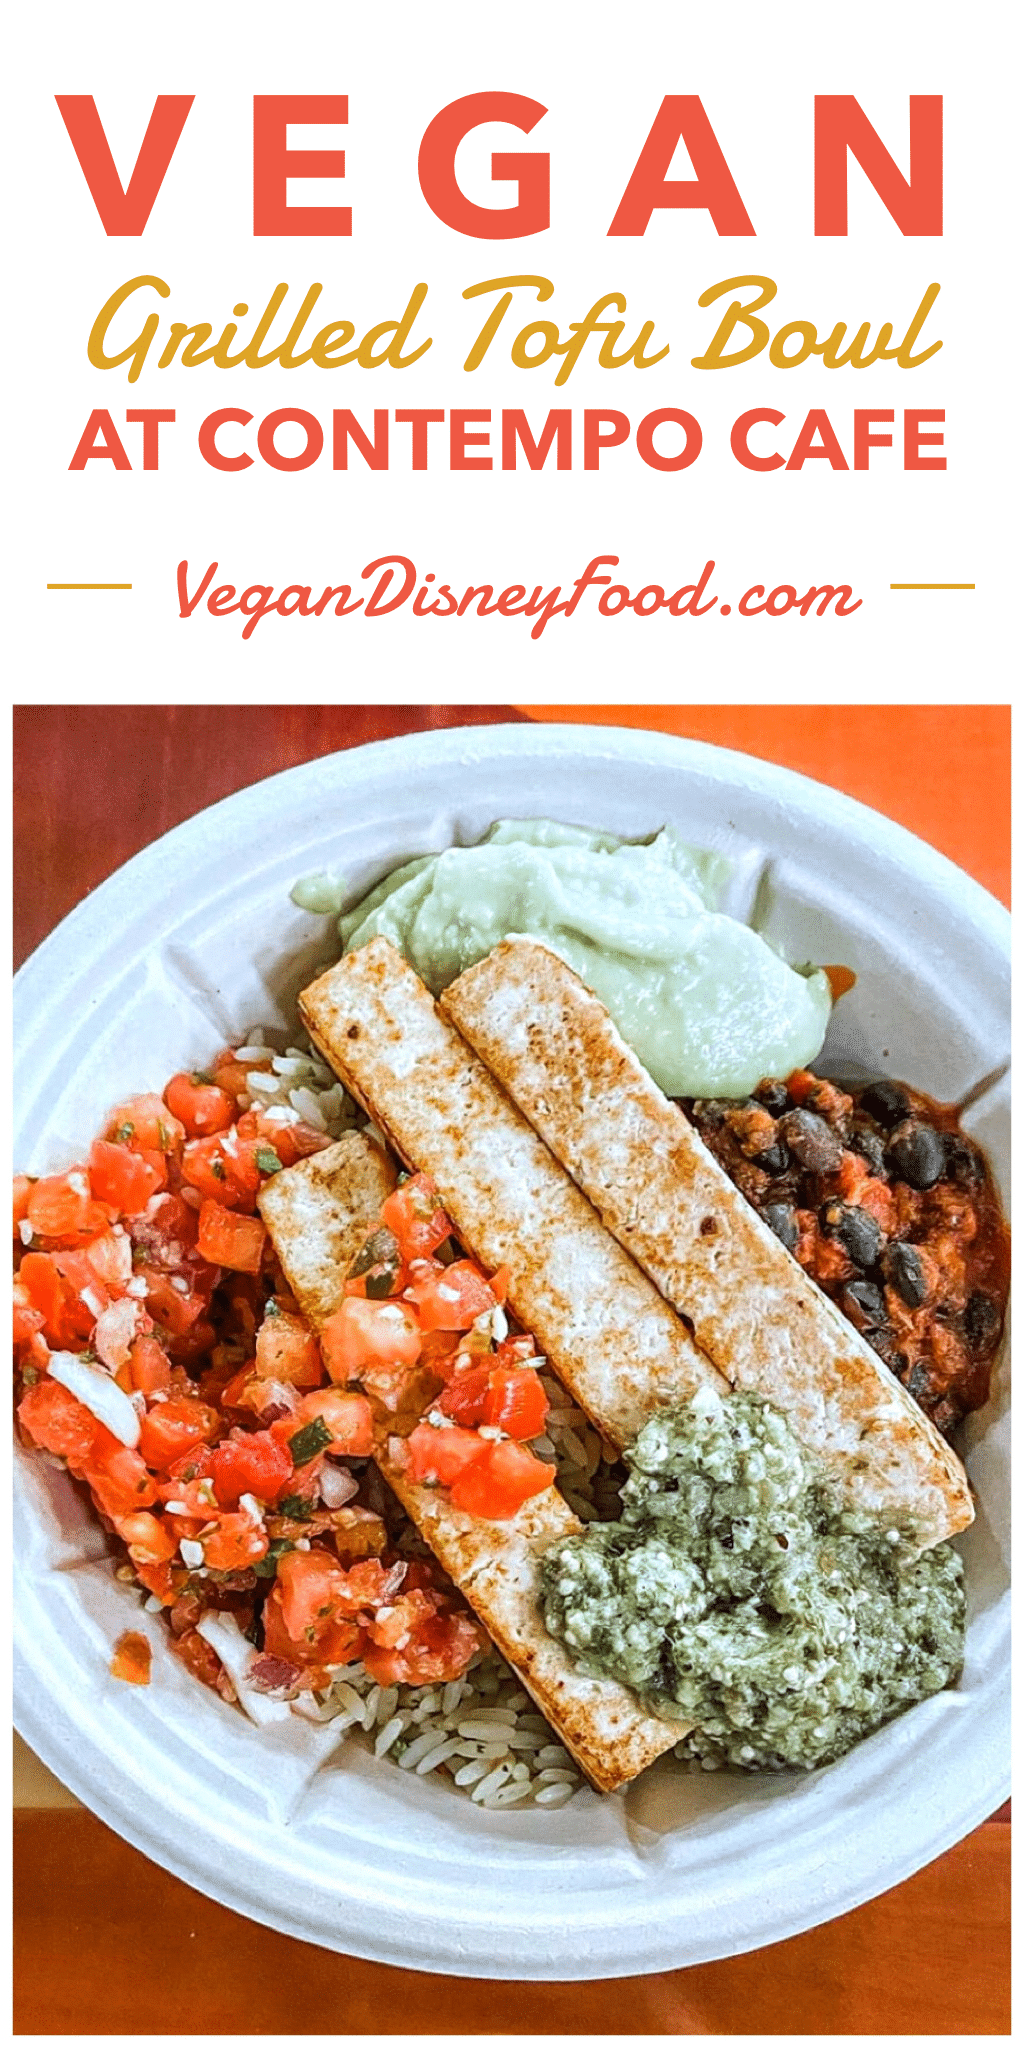 Contempo Cafe Vegan Grilled Tofu Bowl in Disney’s Contemporary Resort